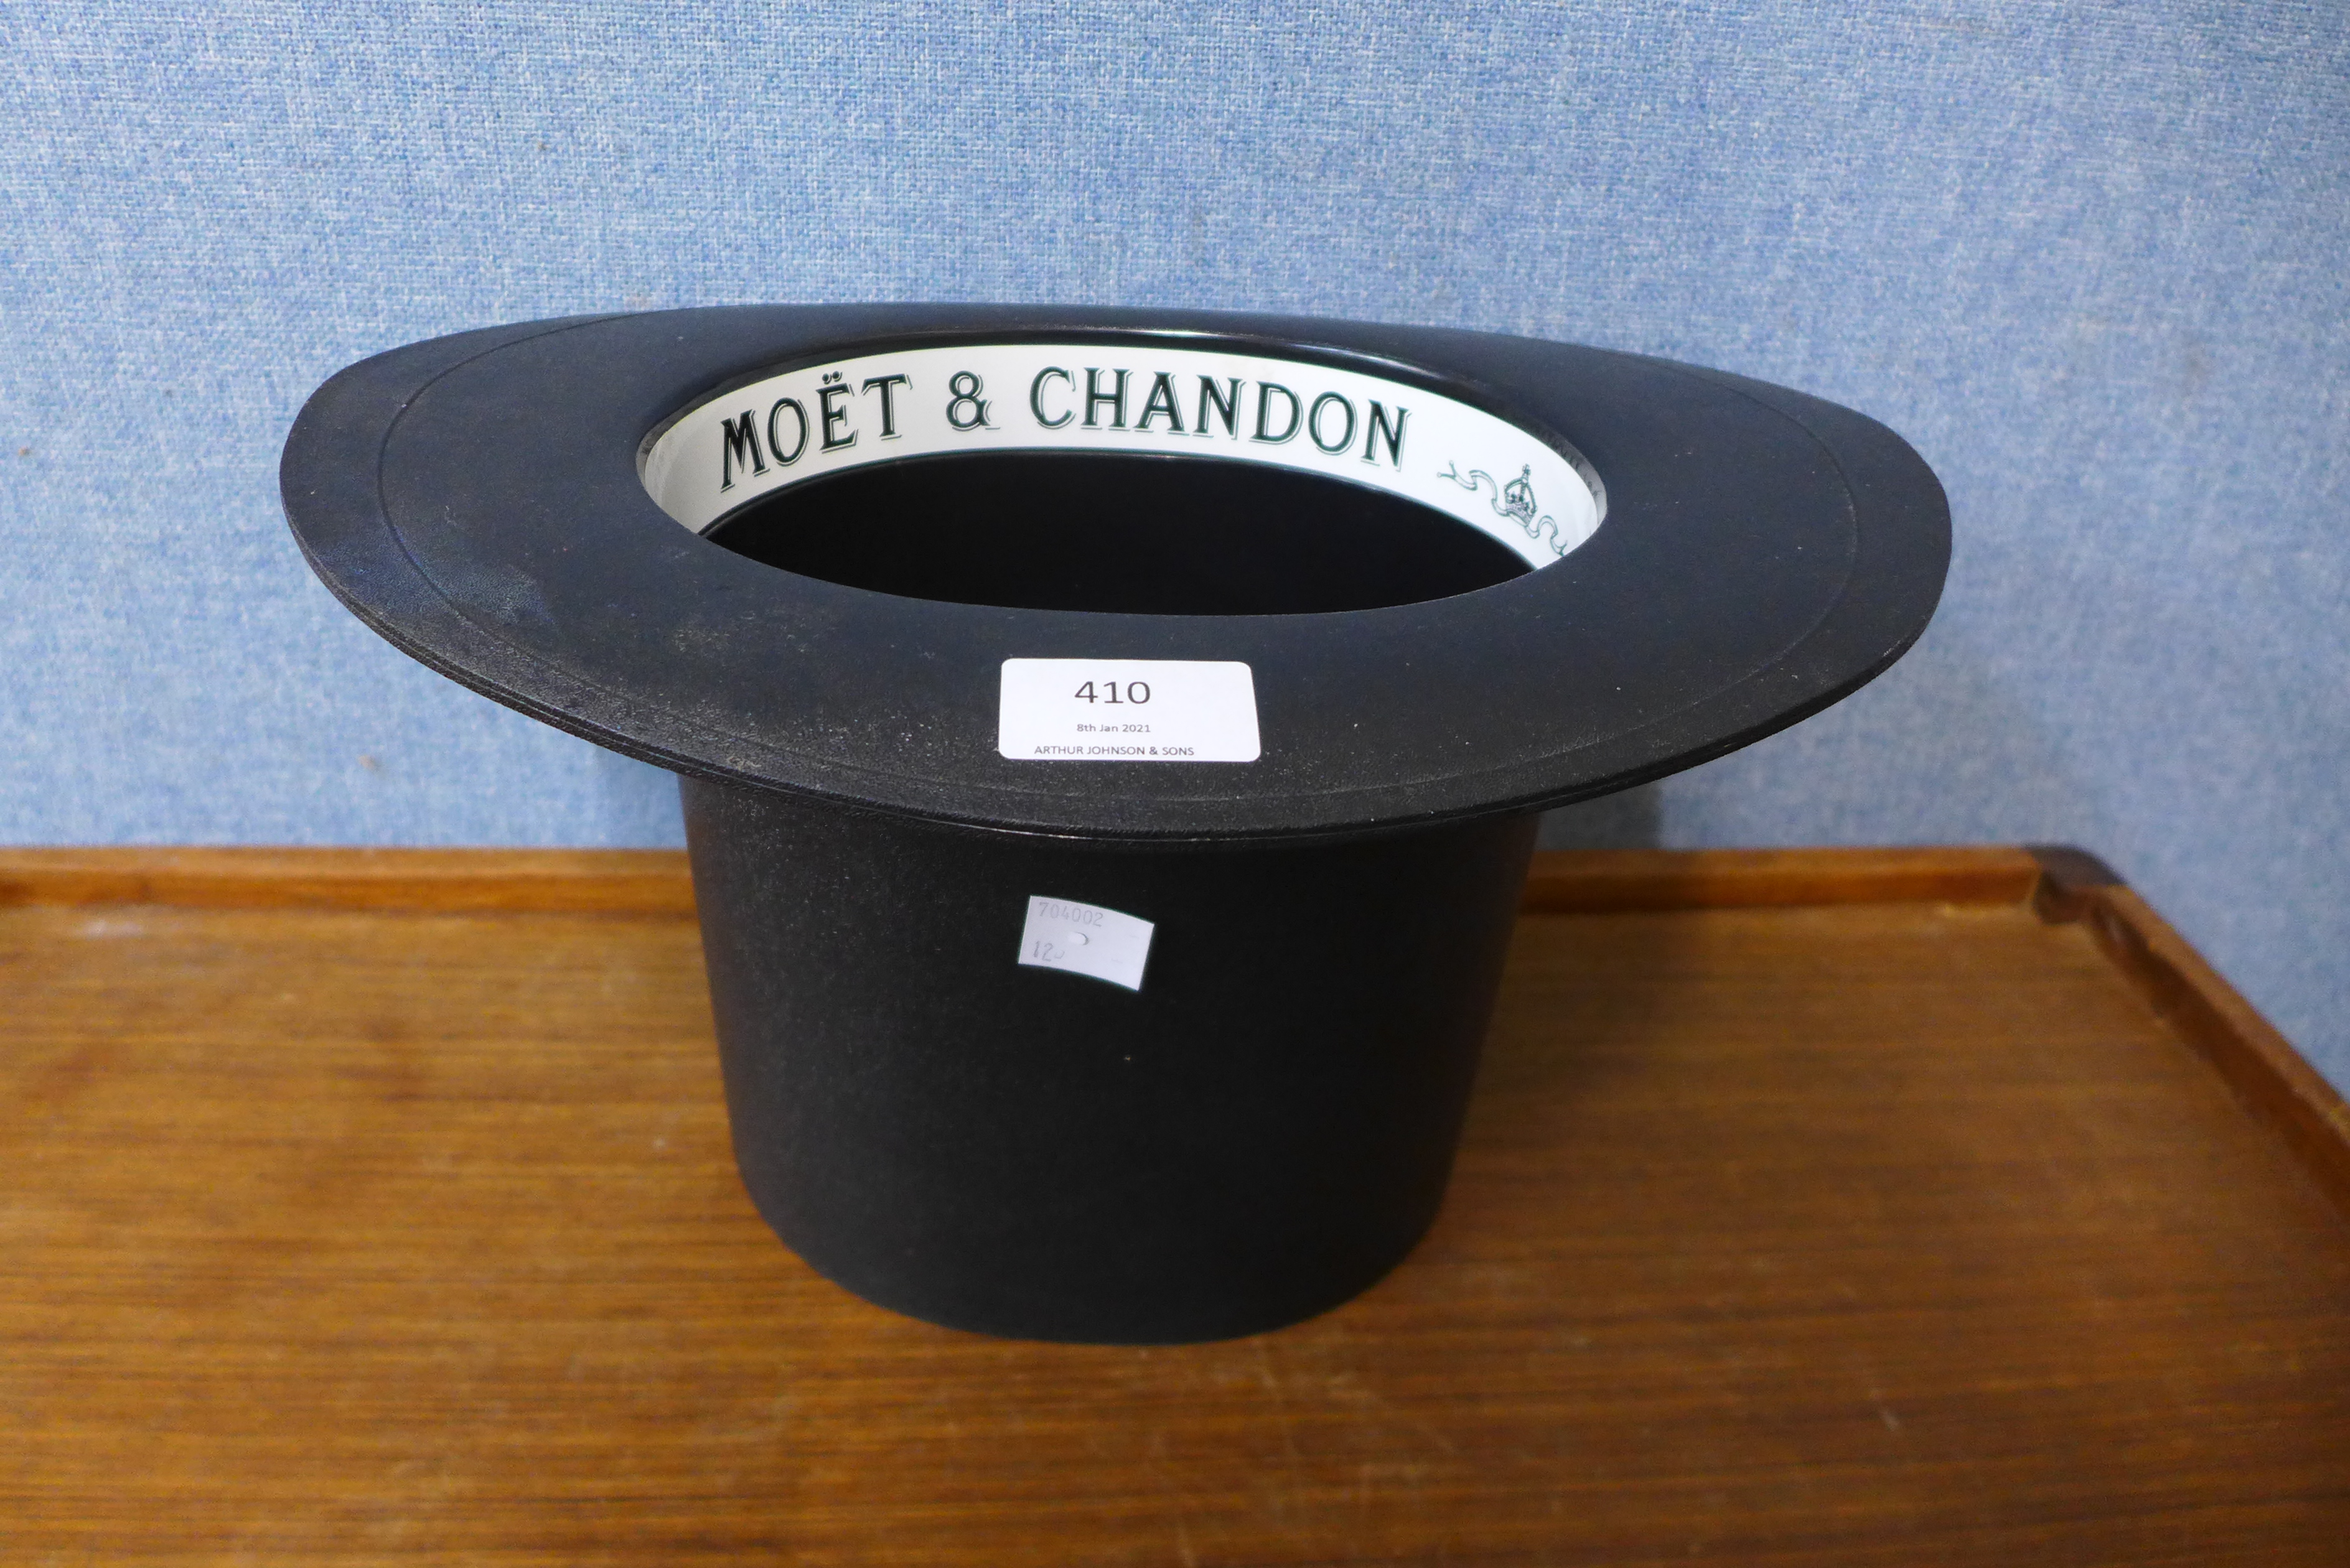 A Moet & Chandon "Top Hat" Champagne cooler